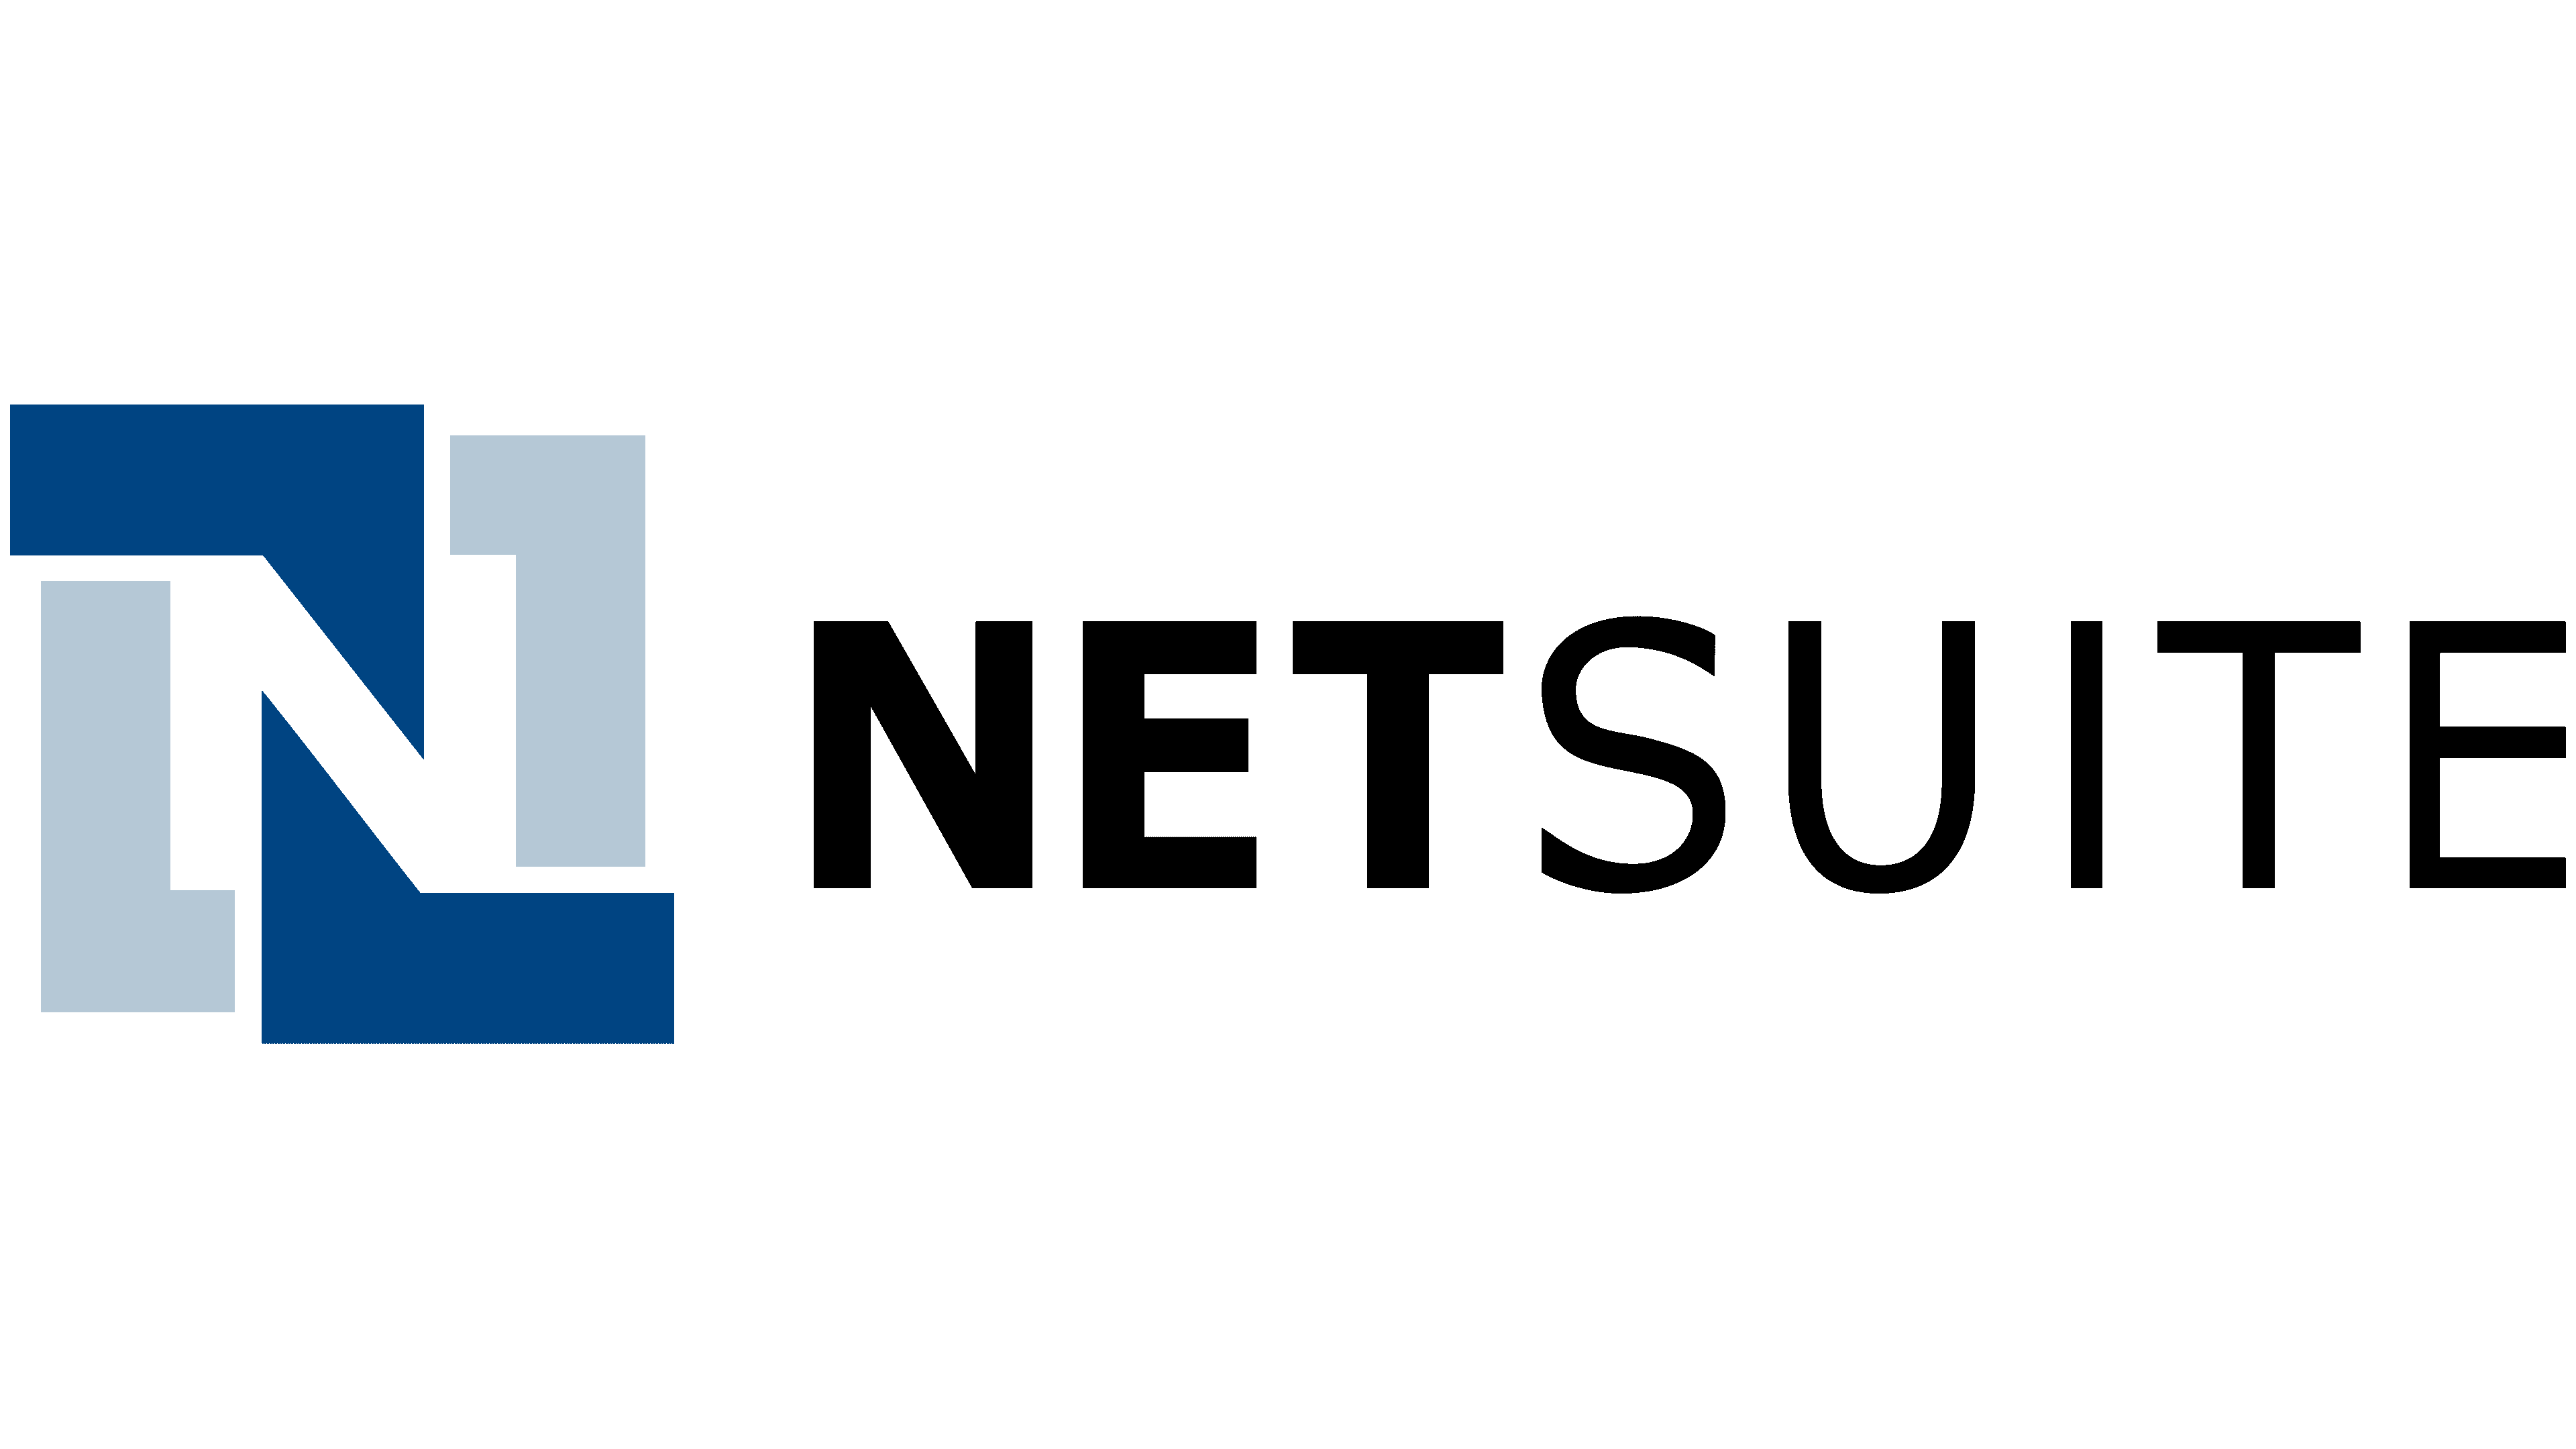 order management software_NetSuite